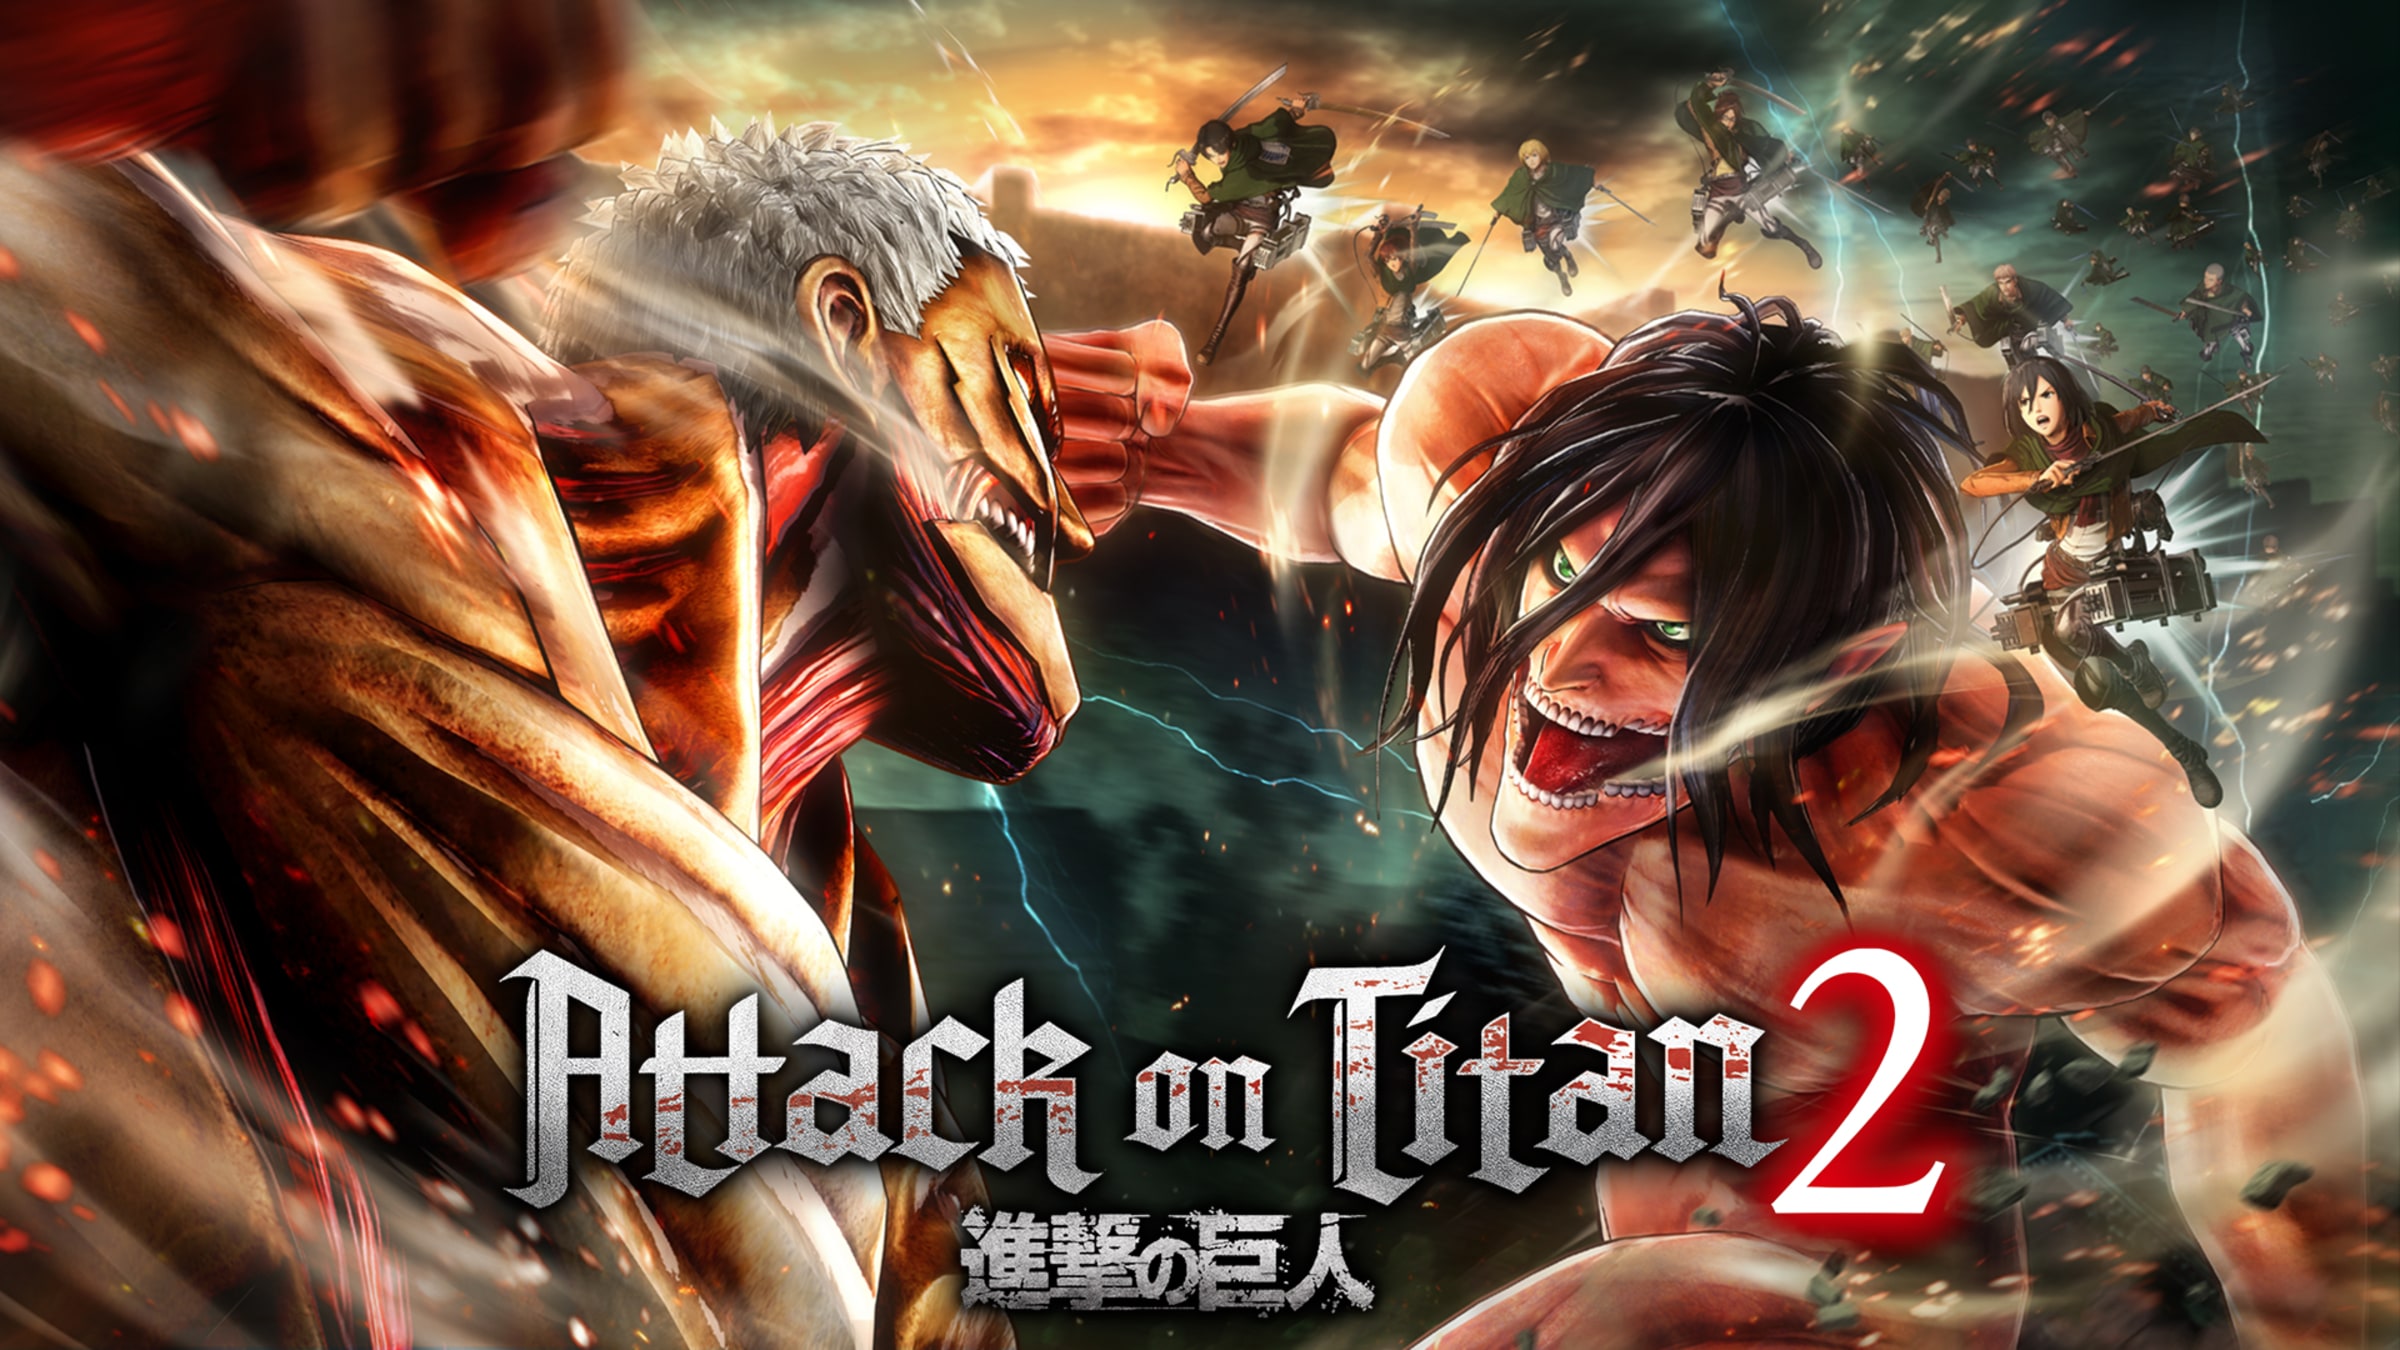 Attack on Titan 2: Final Battle (All DLC's)